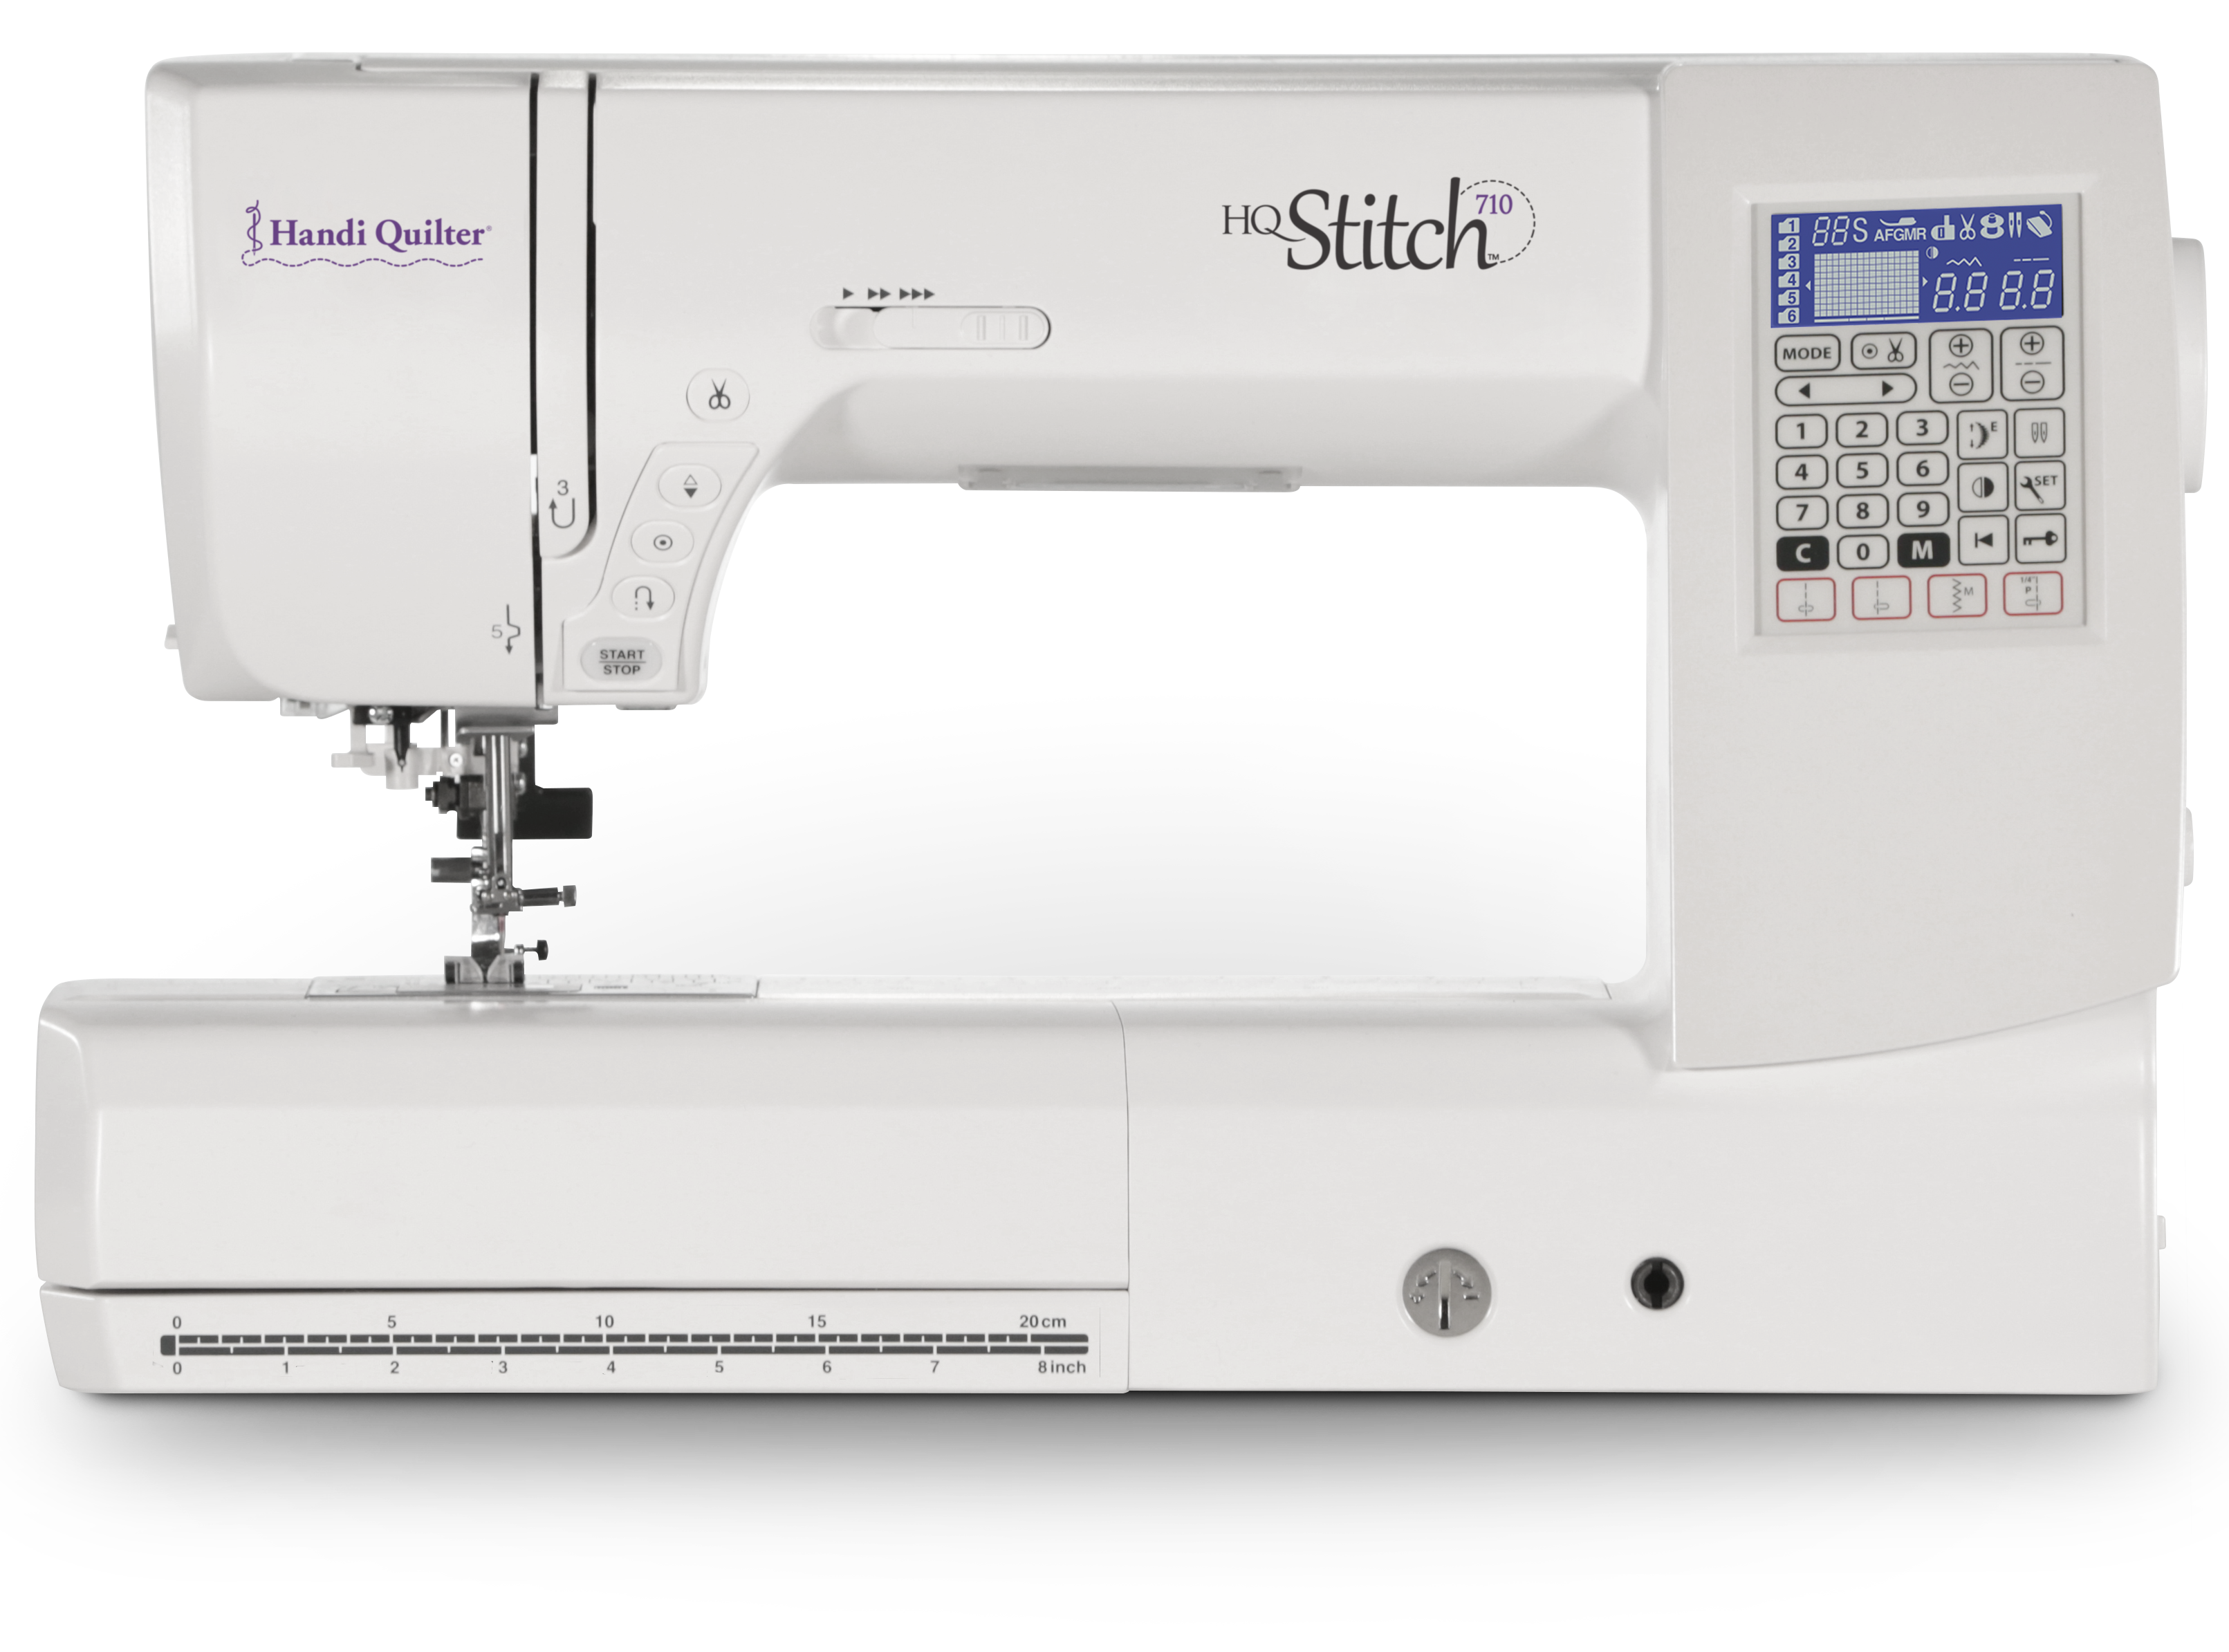 HQ Stitch 310 Machine - The Quilting Connection, LLC.